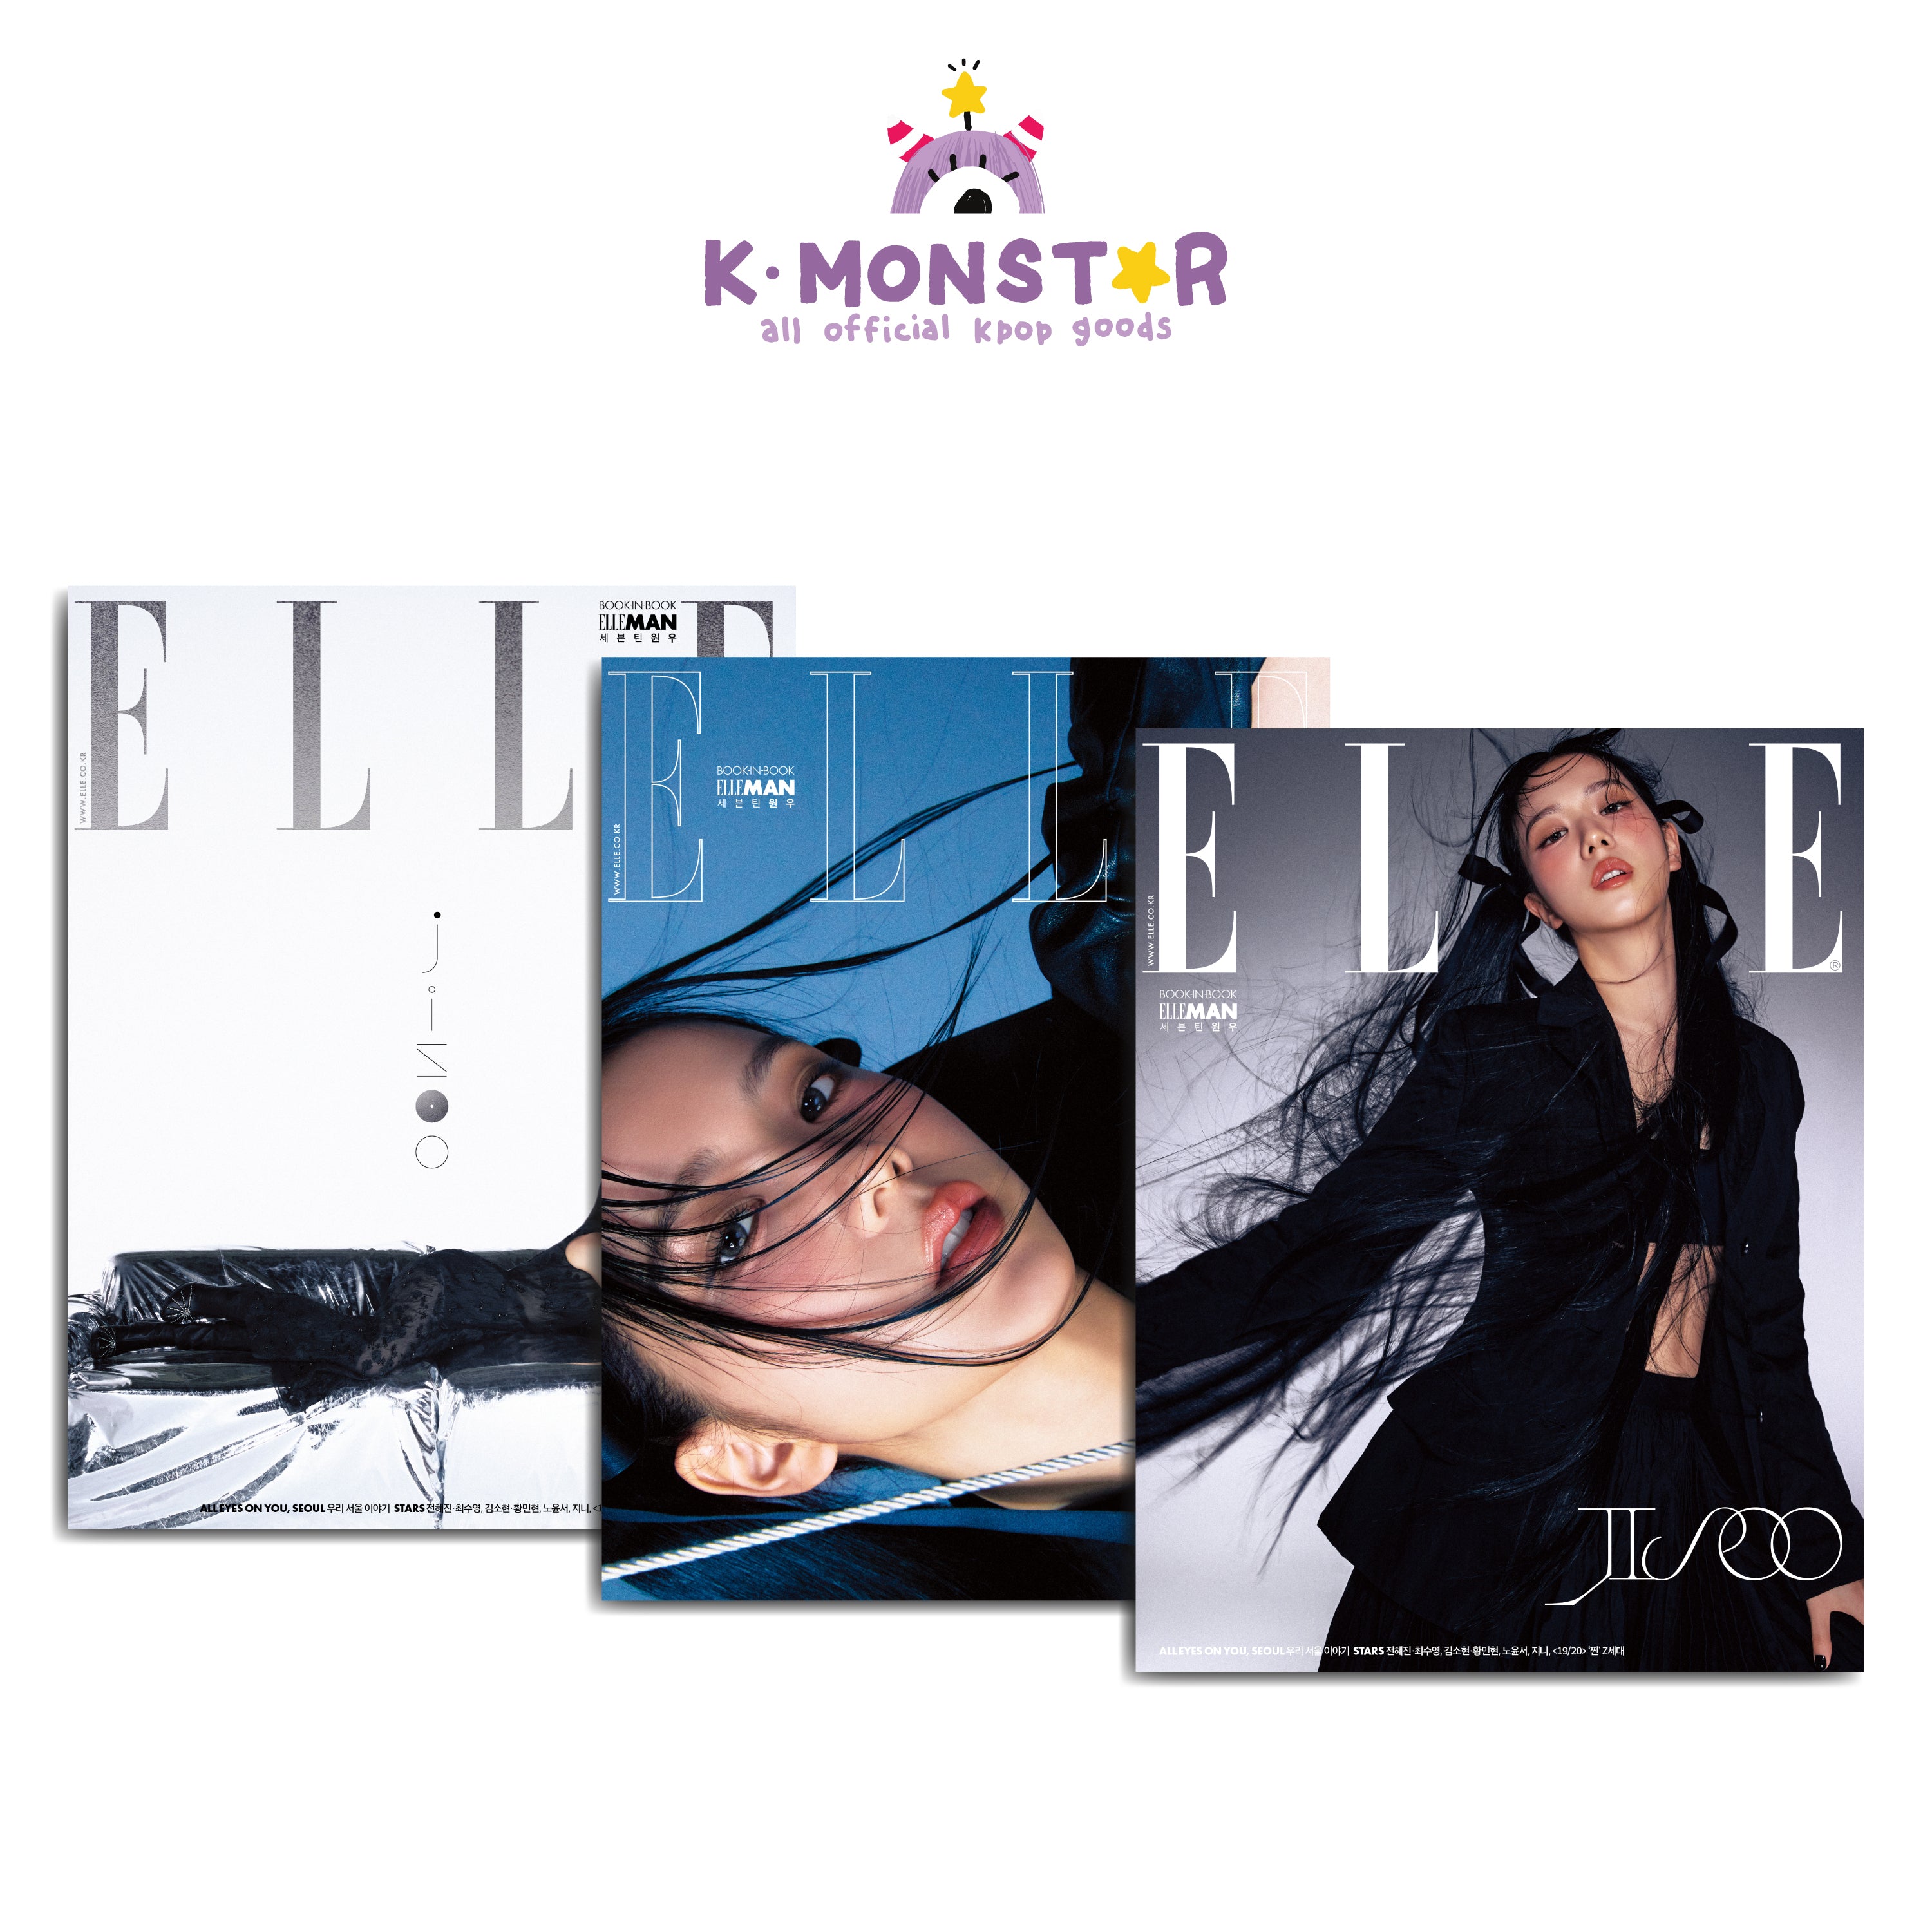 BLACKPINK's Jennie Covers ELLE Korea August 2021 Issue